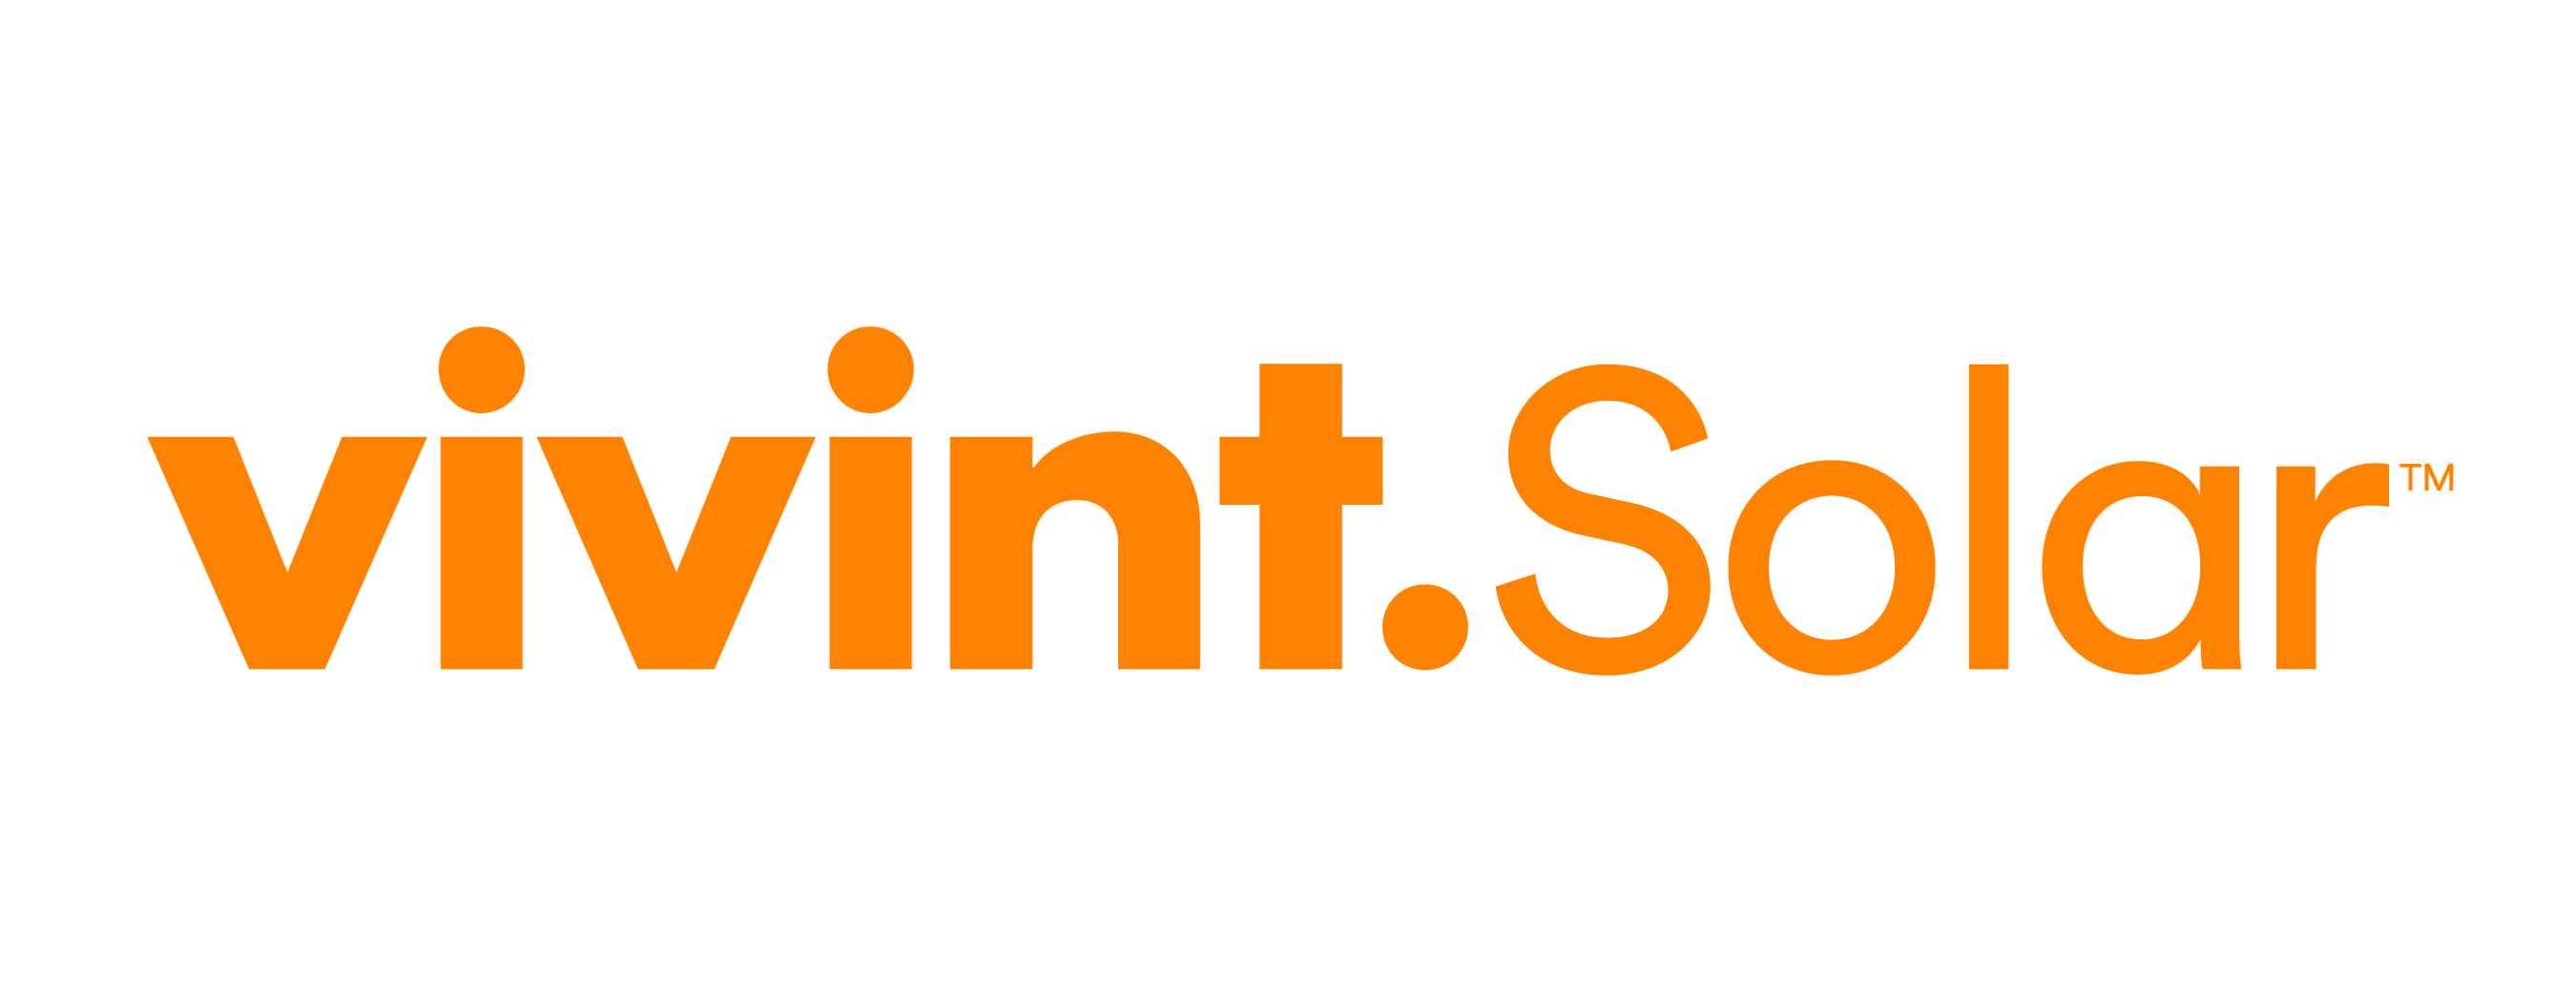 Solar Logo - Vivint Solar - Media Assets - Logos, Pictures, Videos